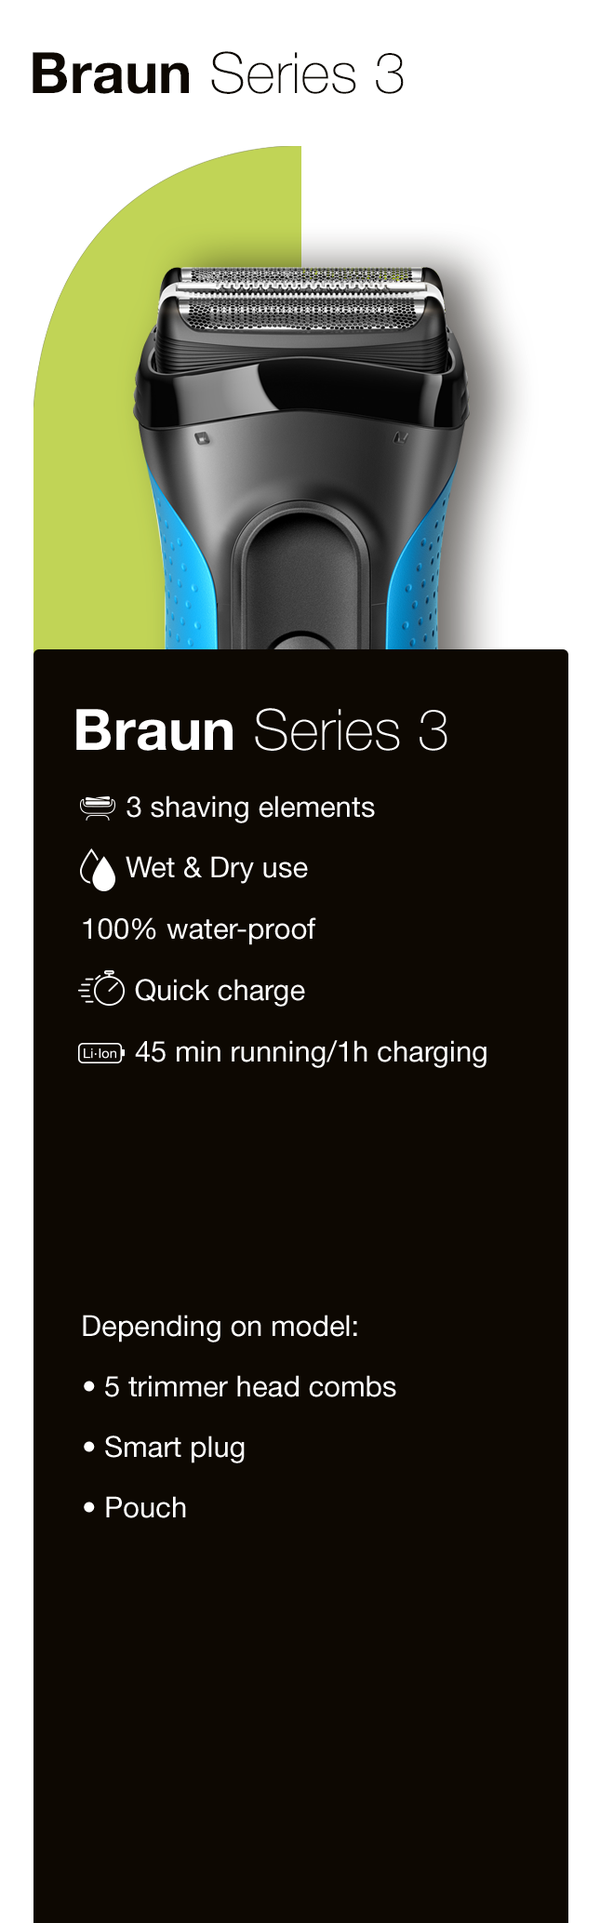 Braun series 3 electric shaver USP's